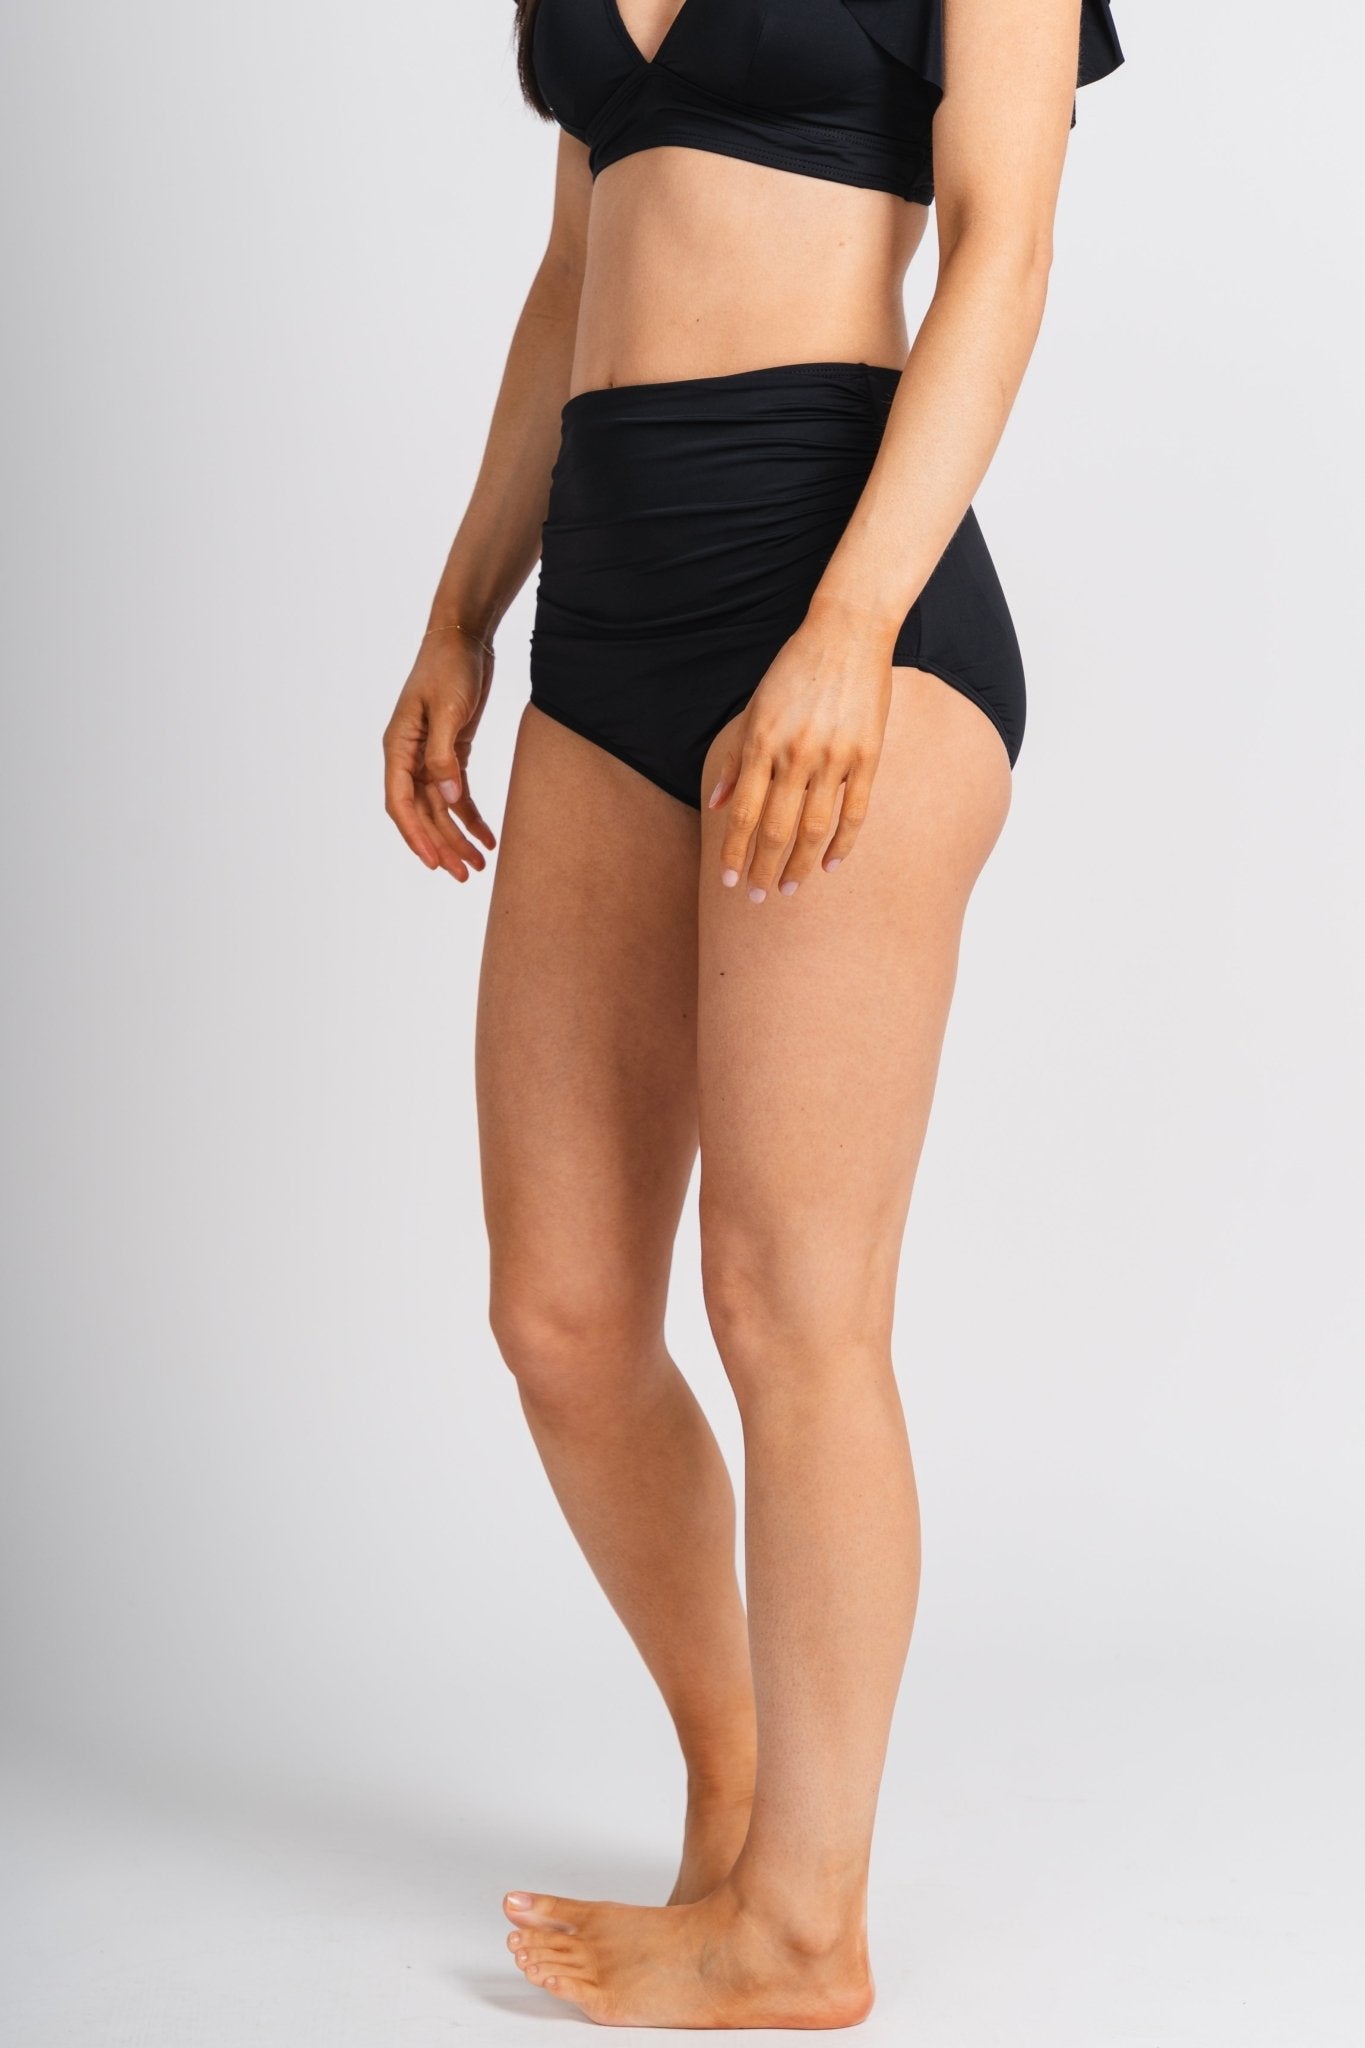 High waist bikini bottoms black - Fun swimsuit - Unique Getaway Gear at Lush Fashion Lounge Boutique in Oklahoma